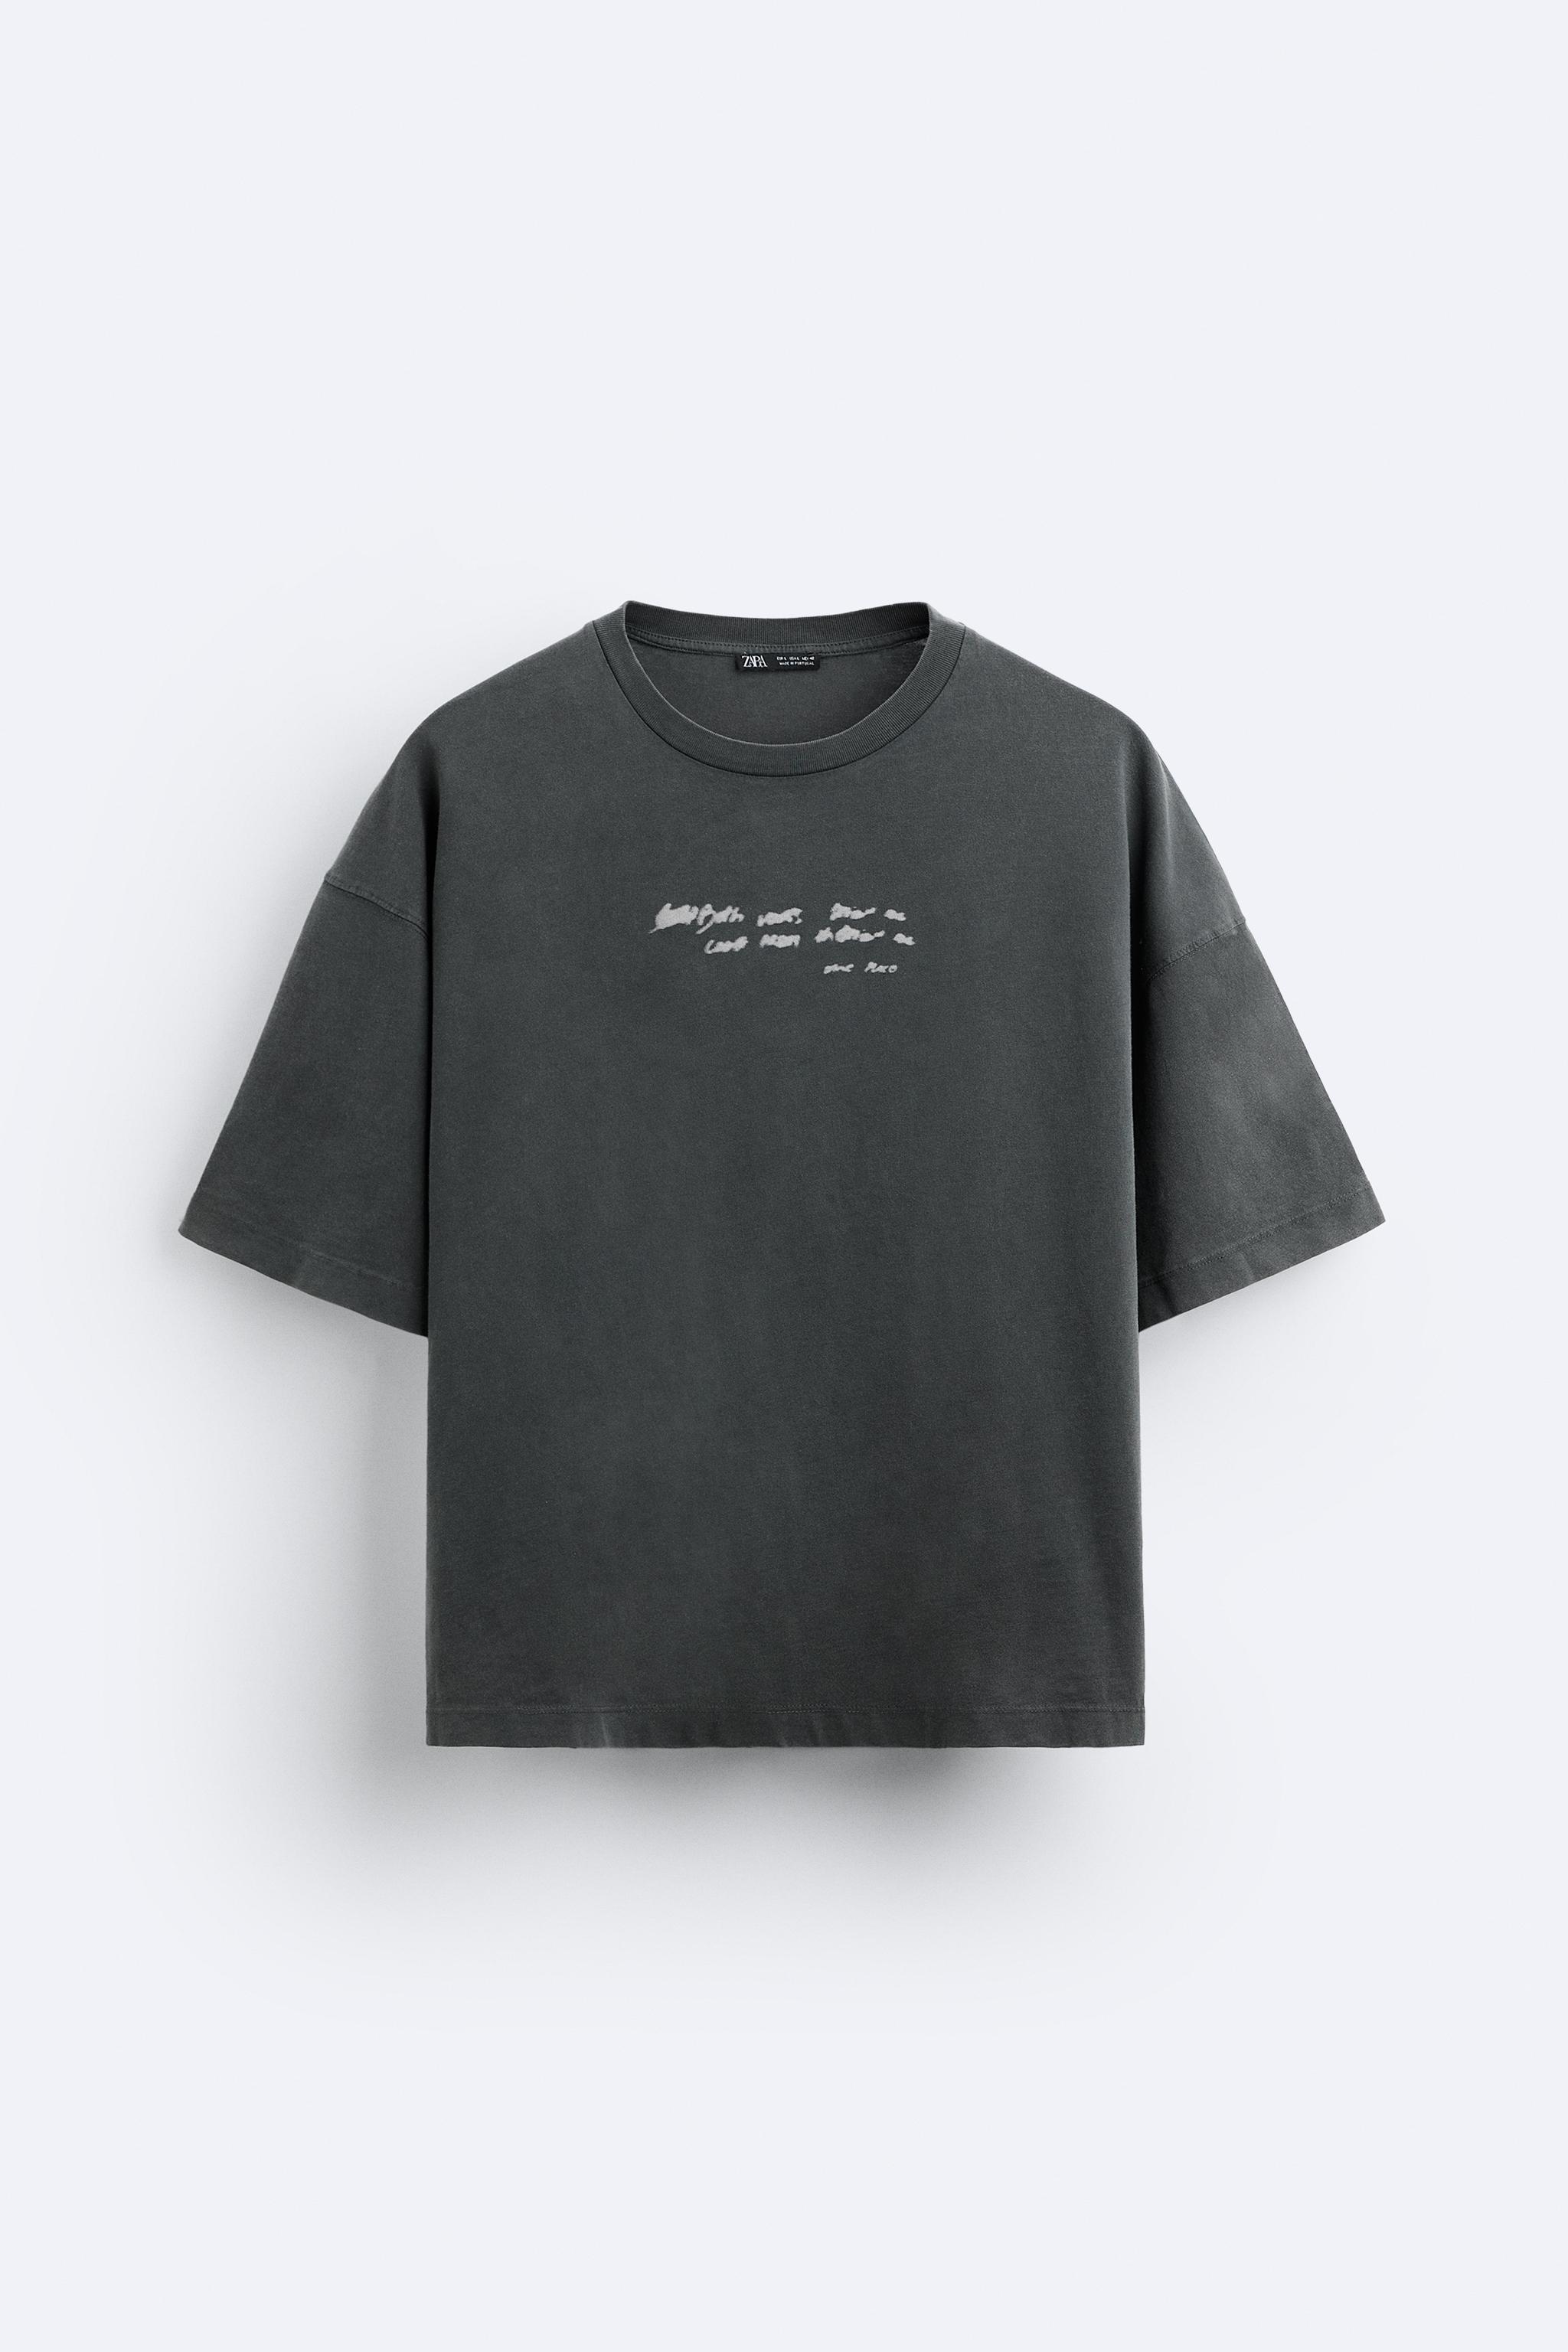 Футболка Zara Faded With Slogan, темно-серый футболка поло zara intarsia knit with slogan серый